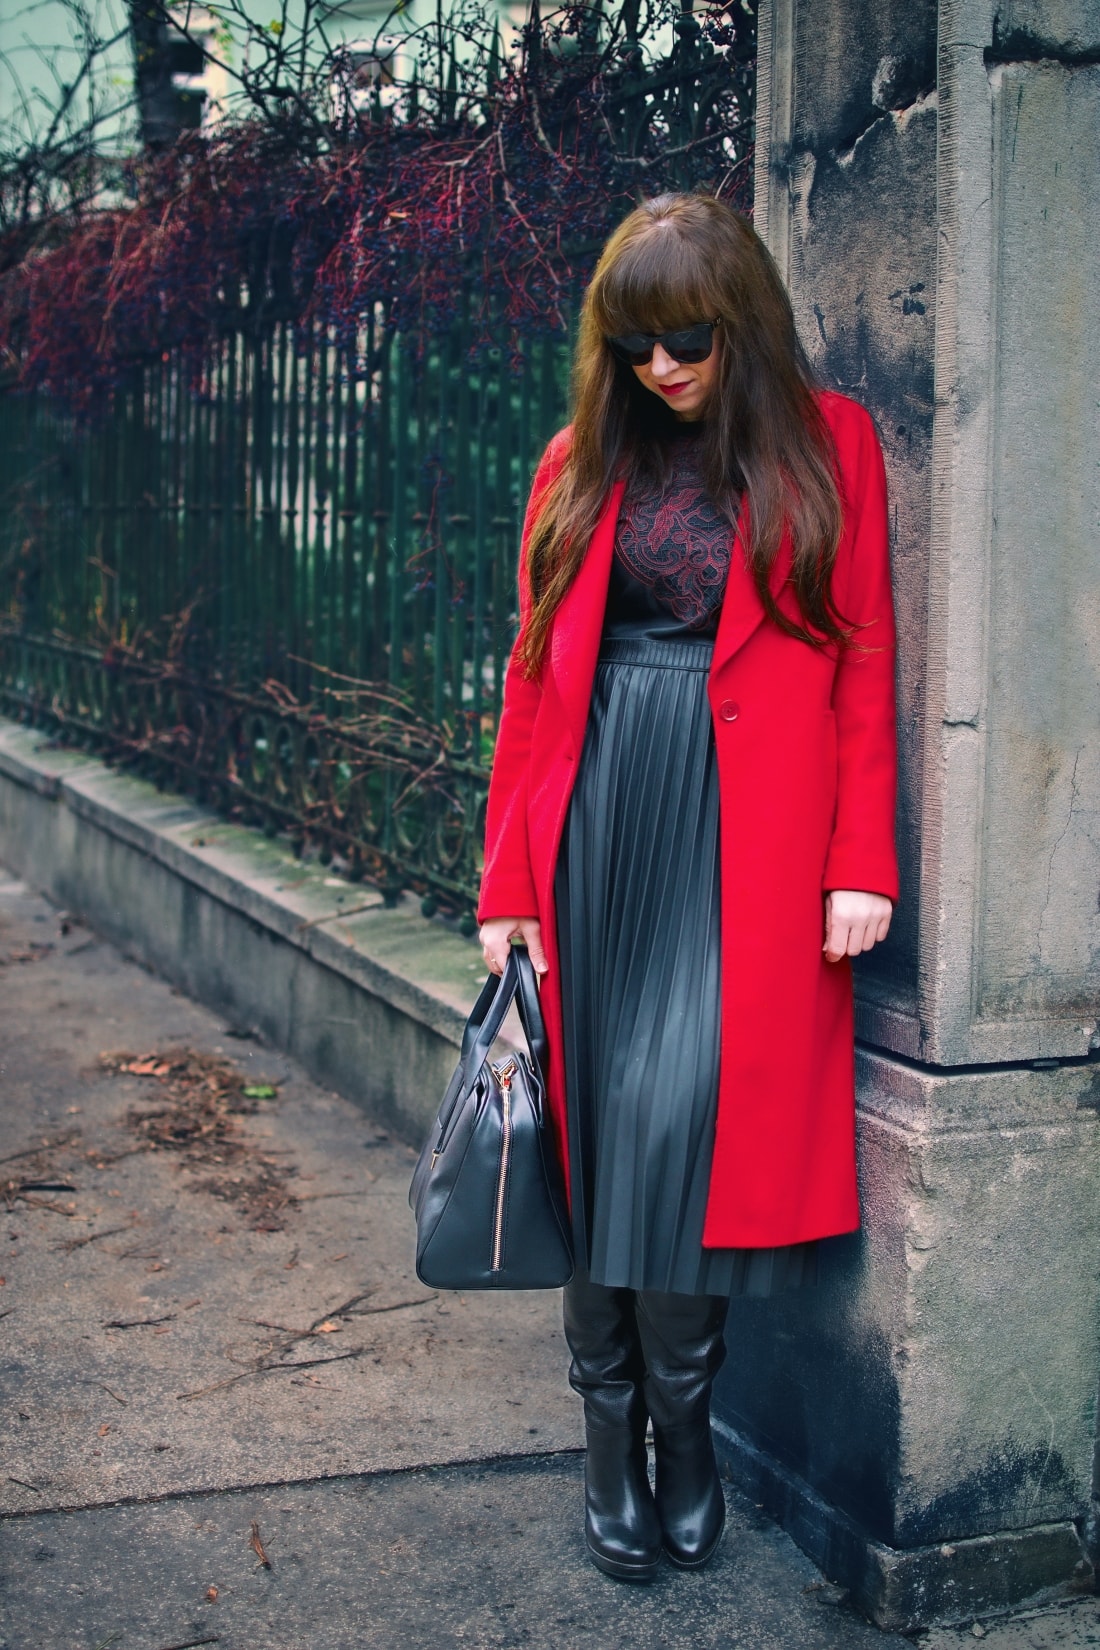 Čierne plisované šaty_Katharine-fashion is beautiful_blog 1_Červený kabát Zara_Kabelka Parfois_Katarína Jakubčová_Fashion blogger